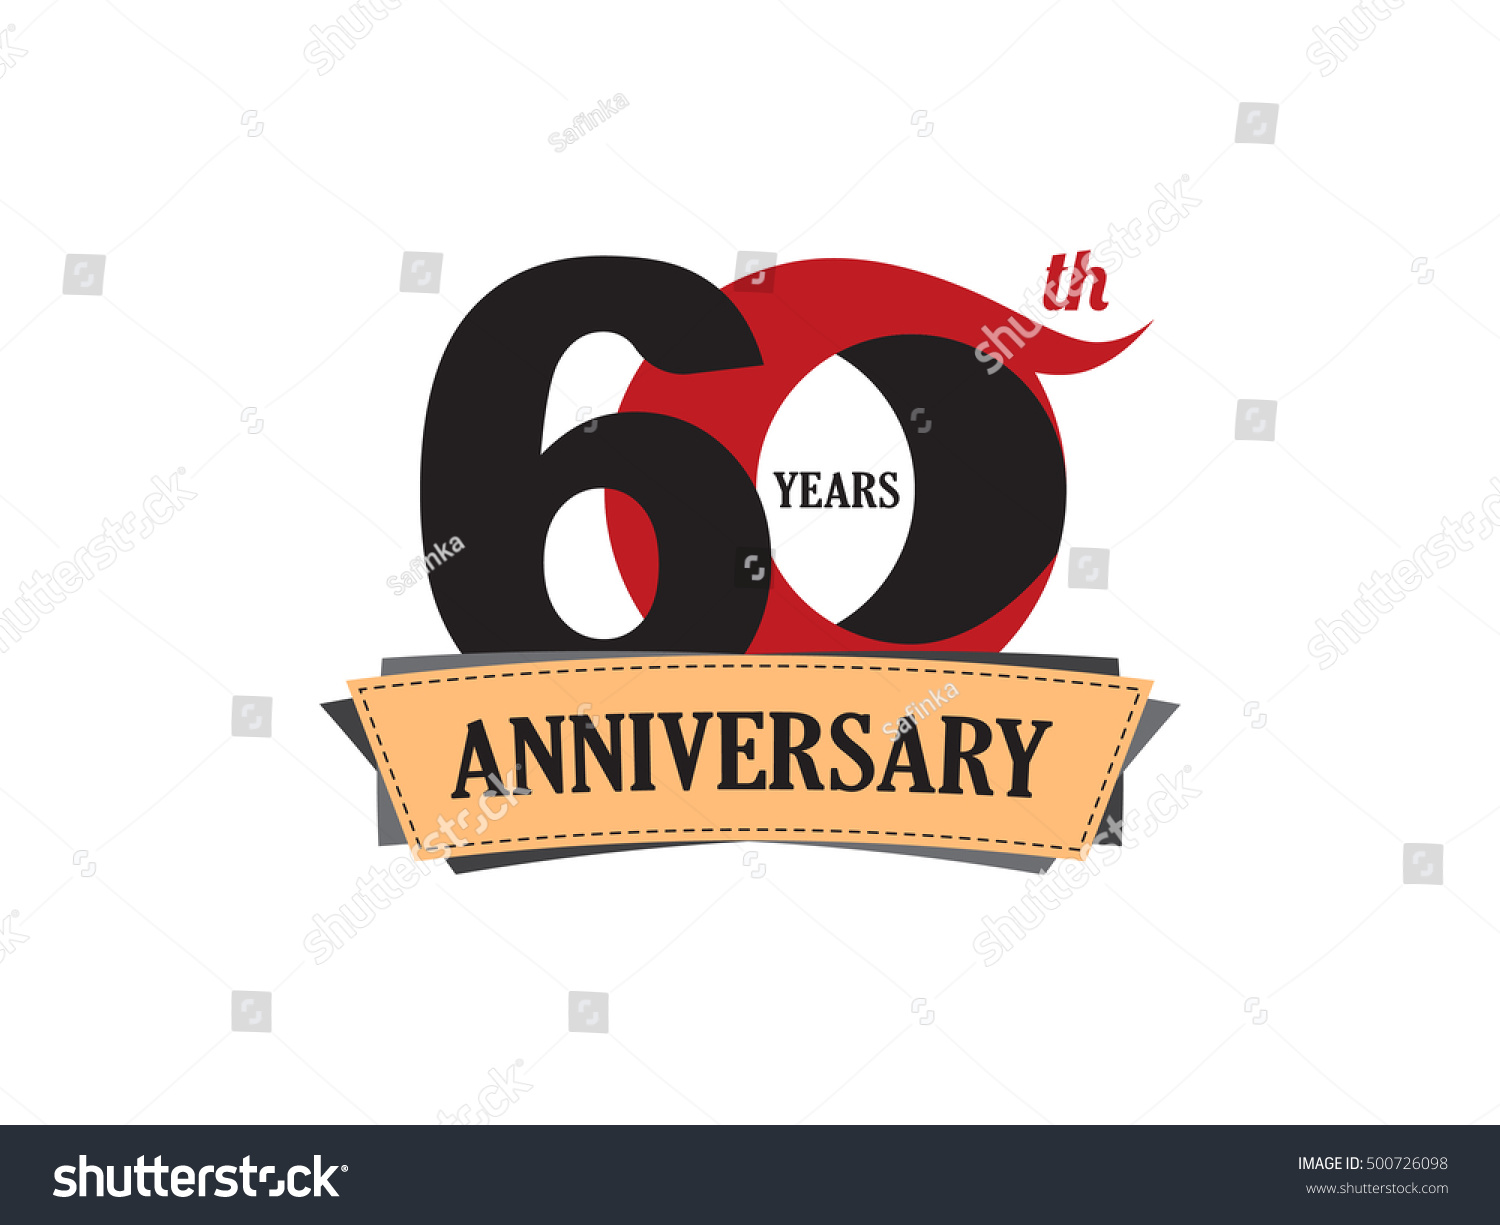 60 Years Anniversary Celebration Logo Design Stock Vector (Royalty Free ...